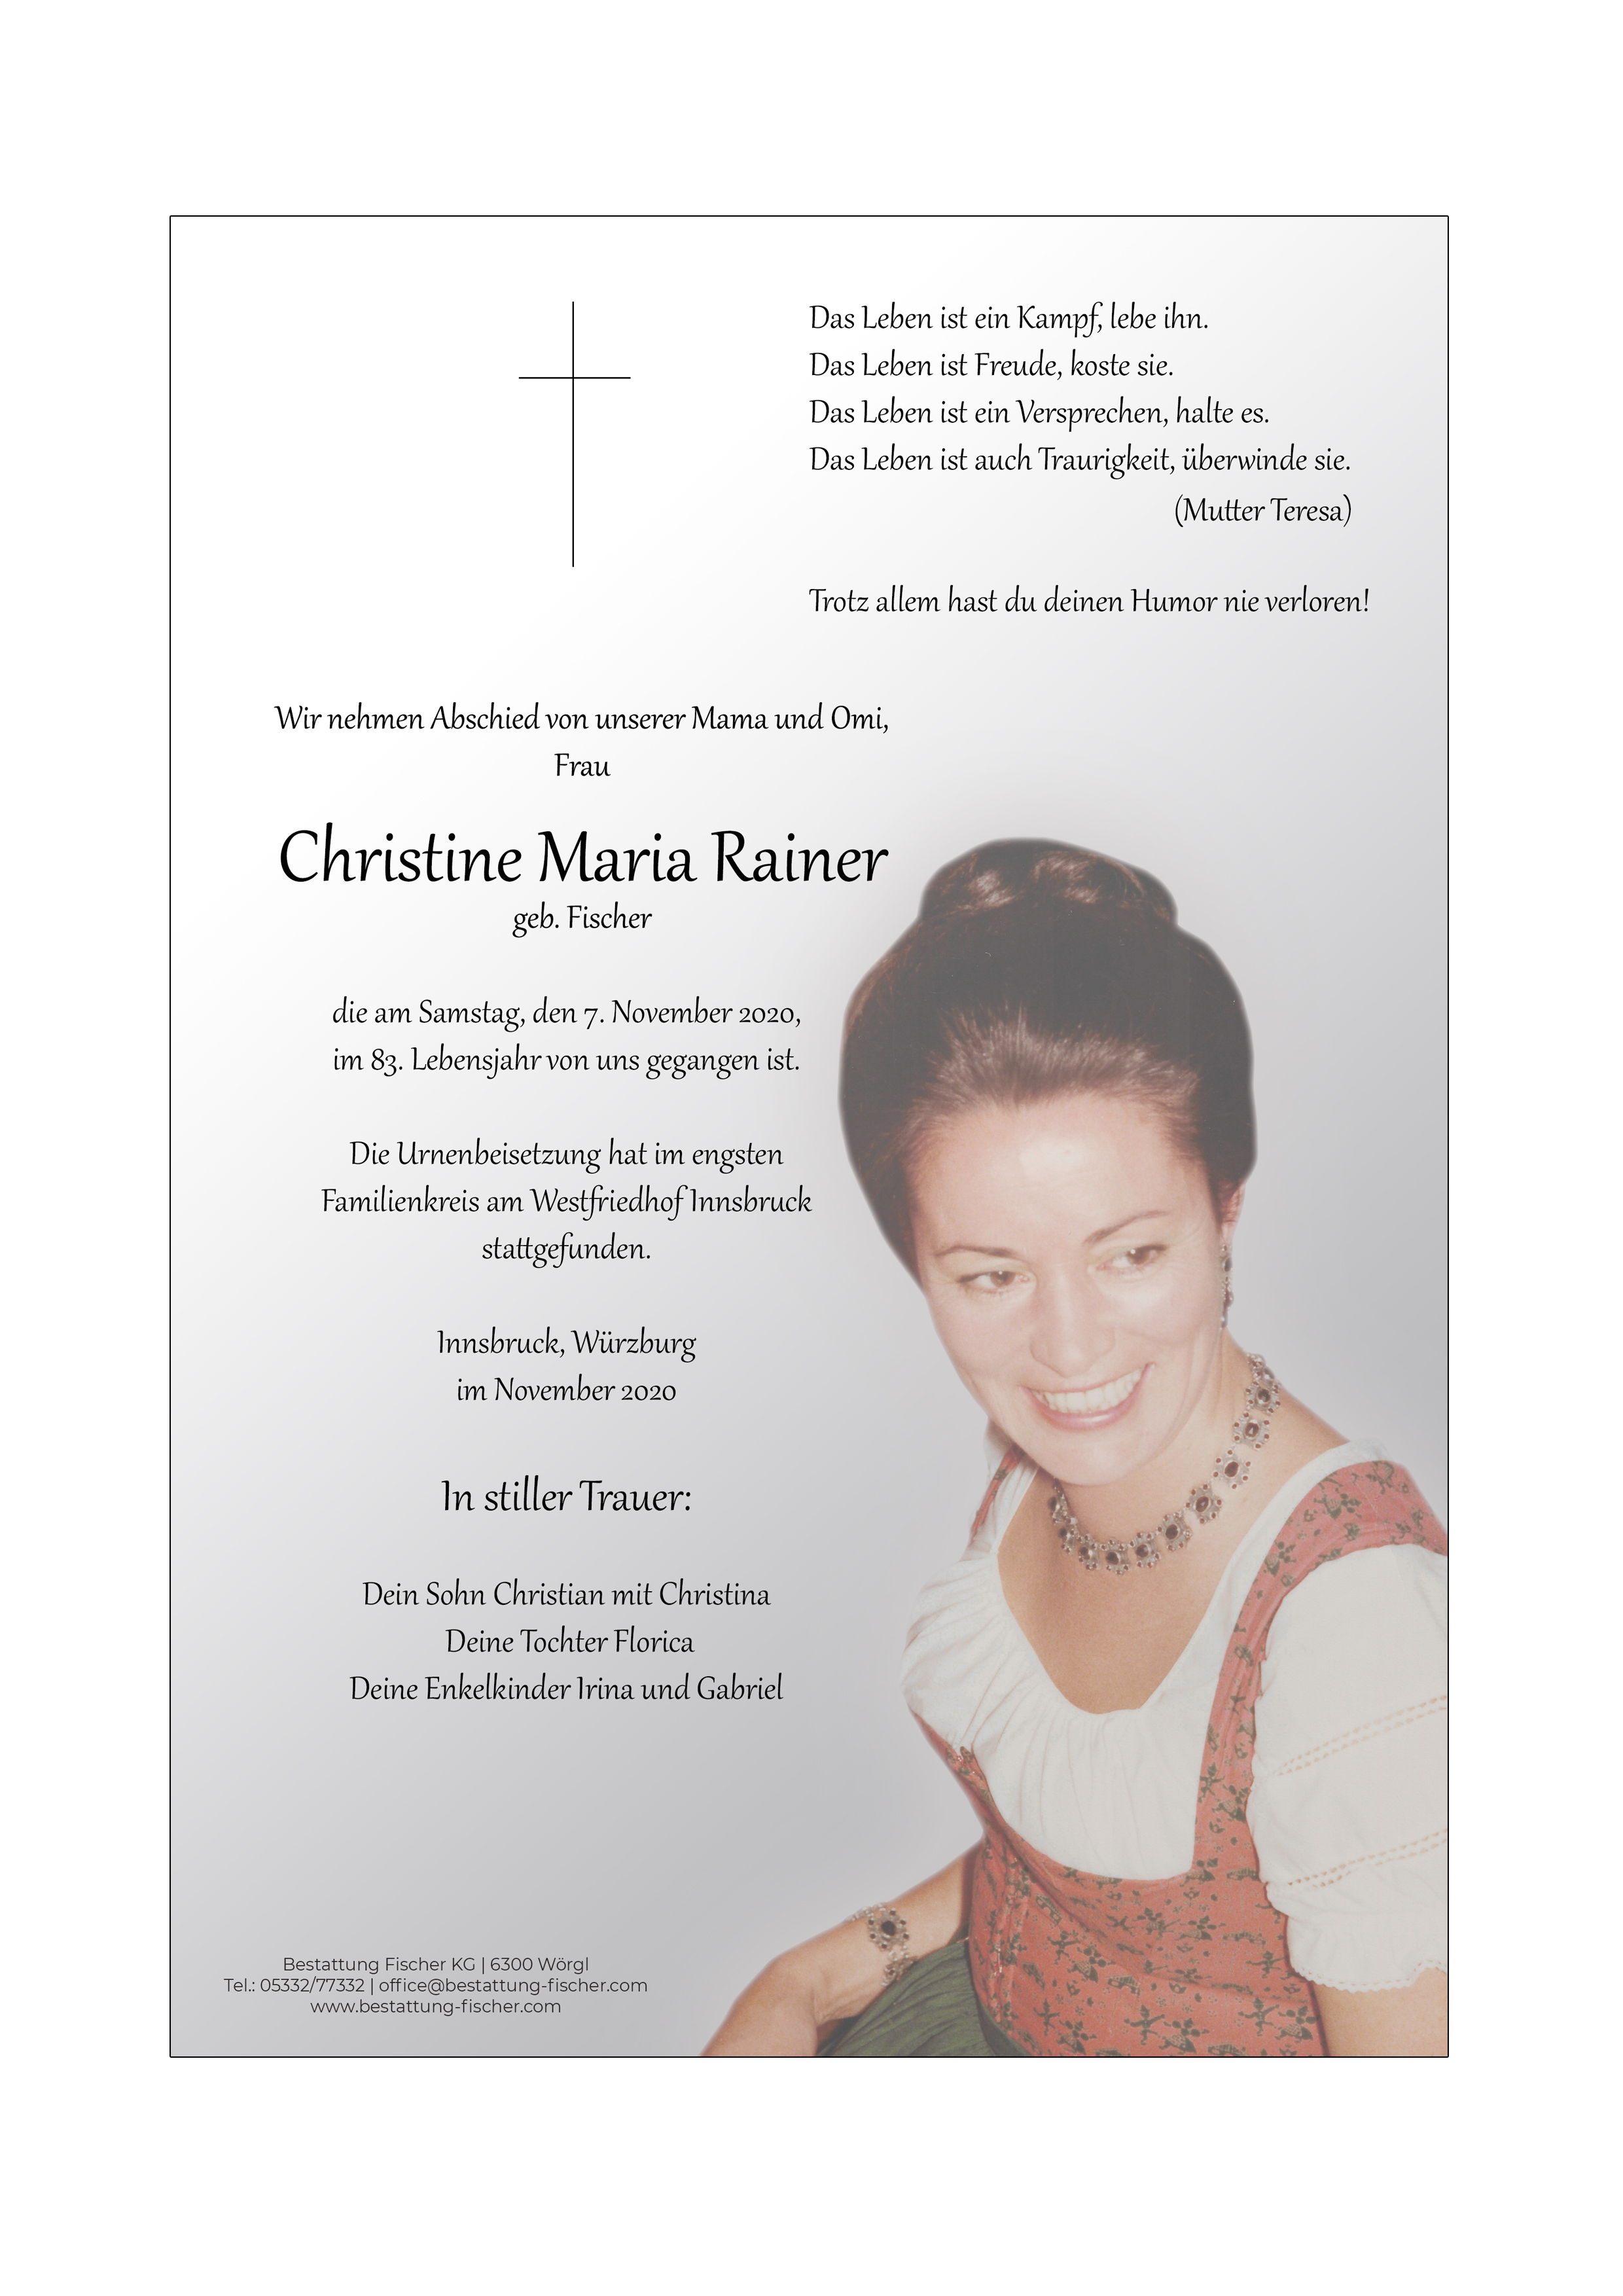 Christine Maria Rainer